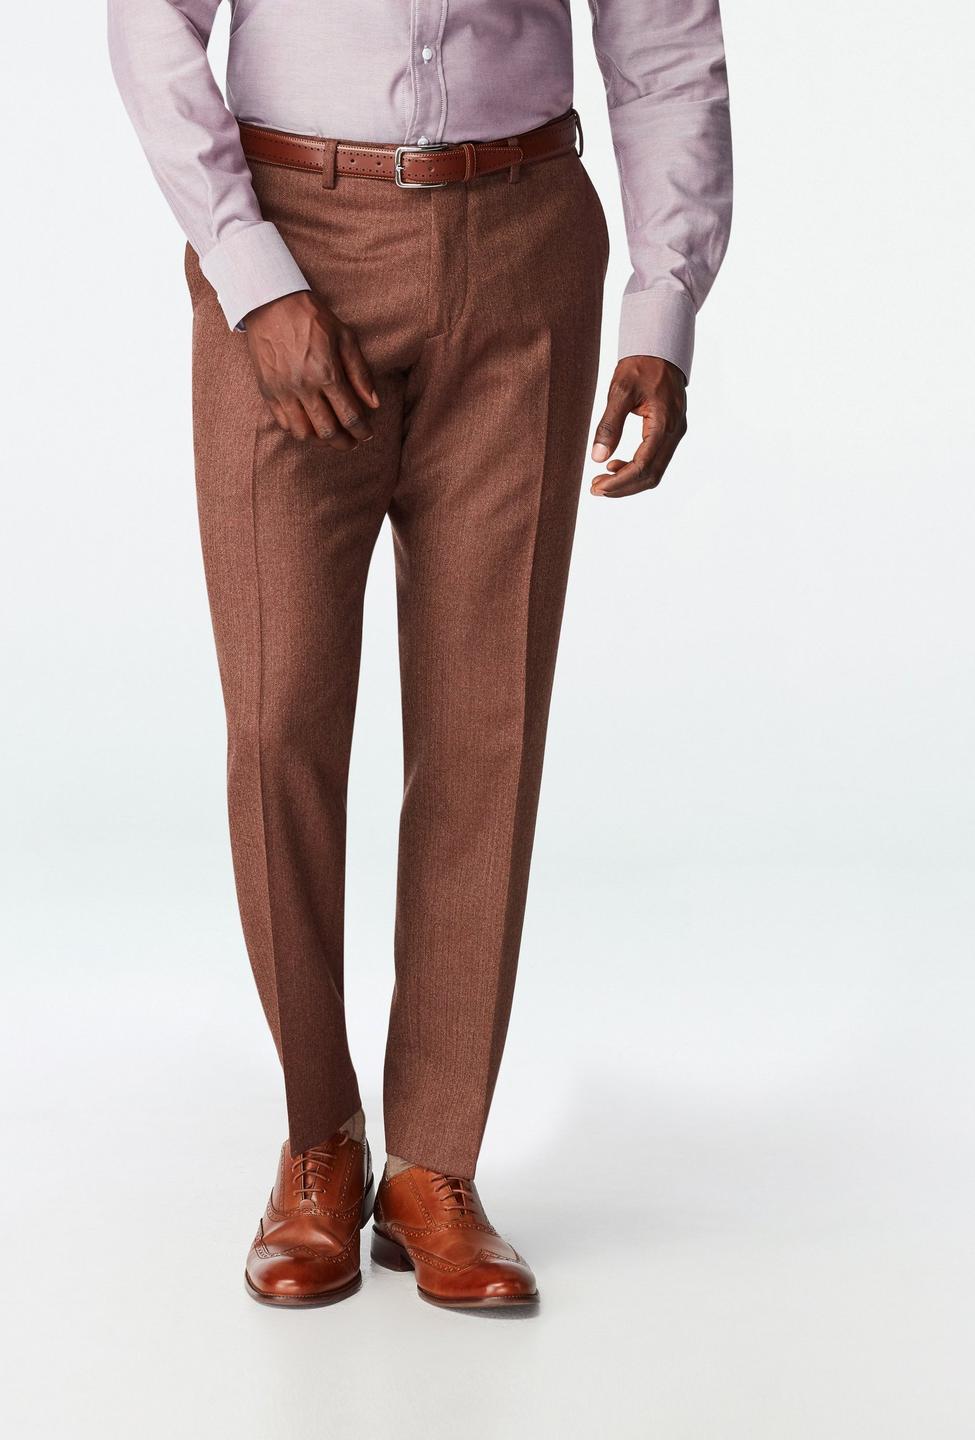 Brown pants - Prescot Herringbone Design from Seasonal Indochino Collection